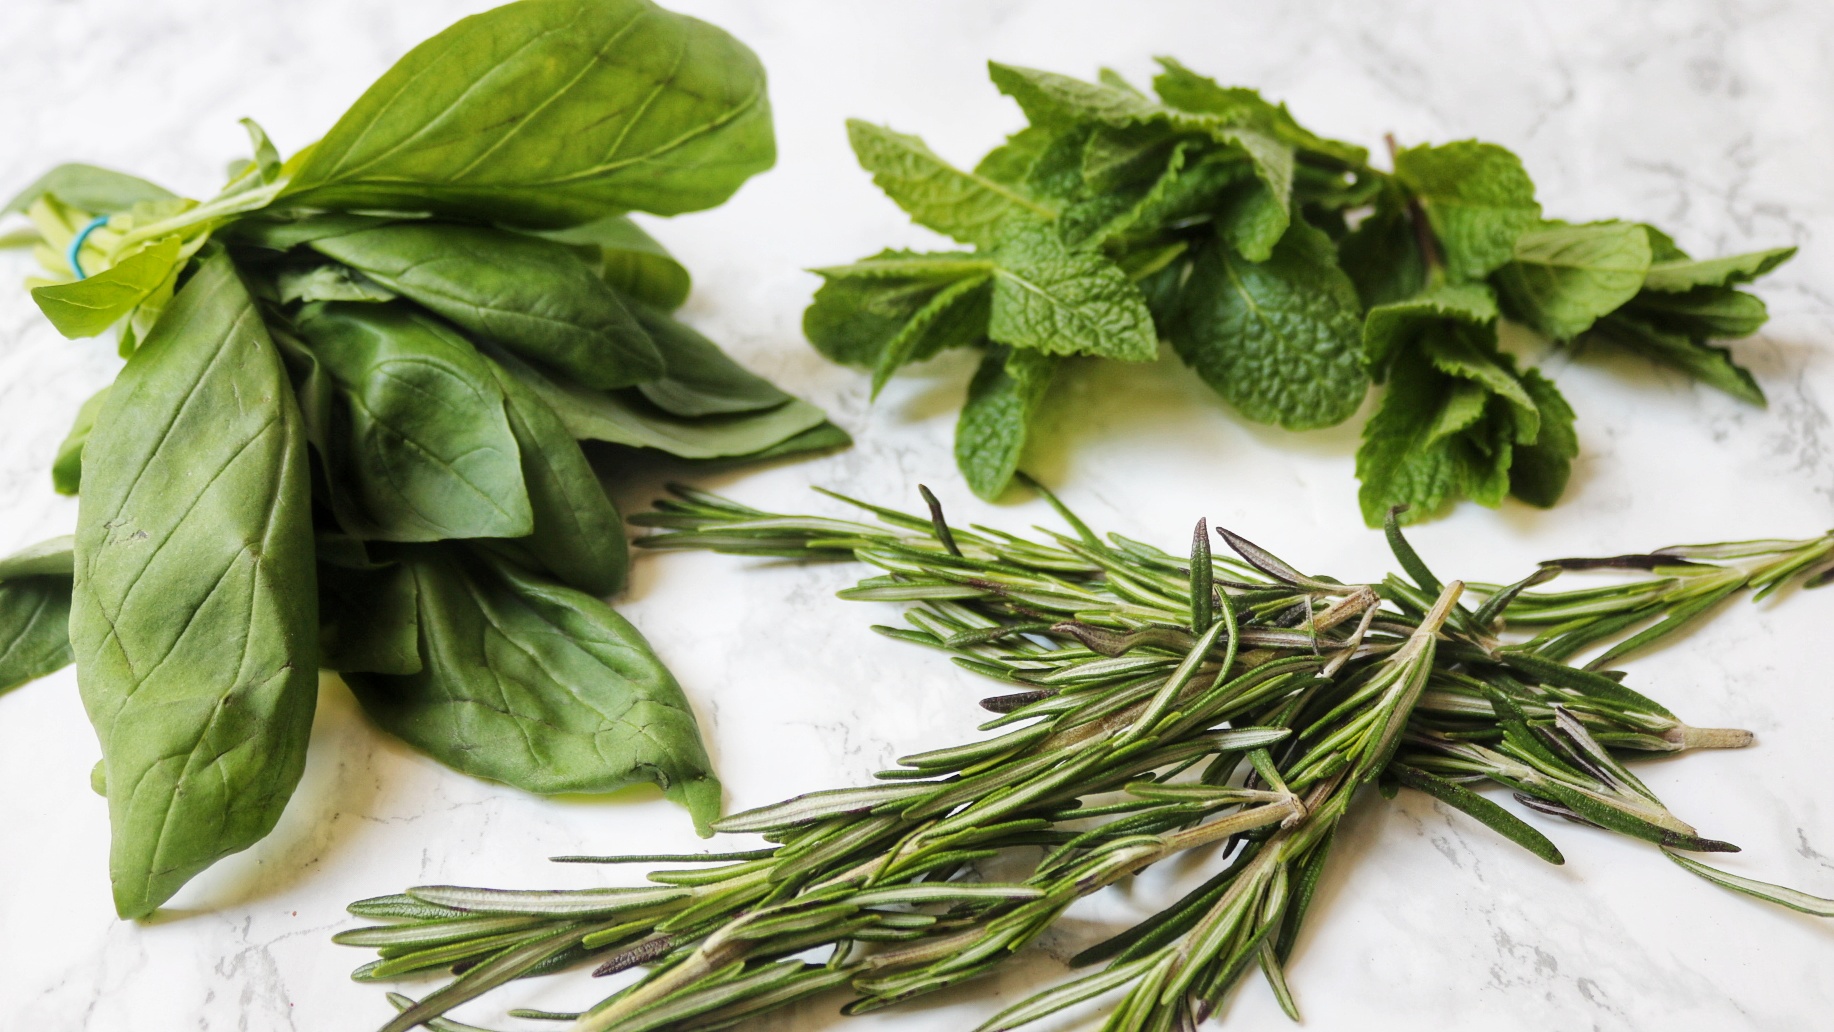 Herbs for flavouring kombucha